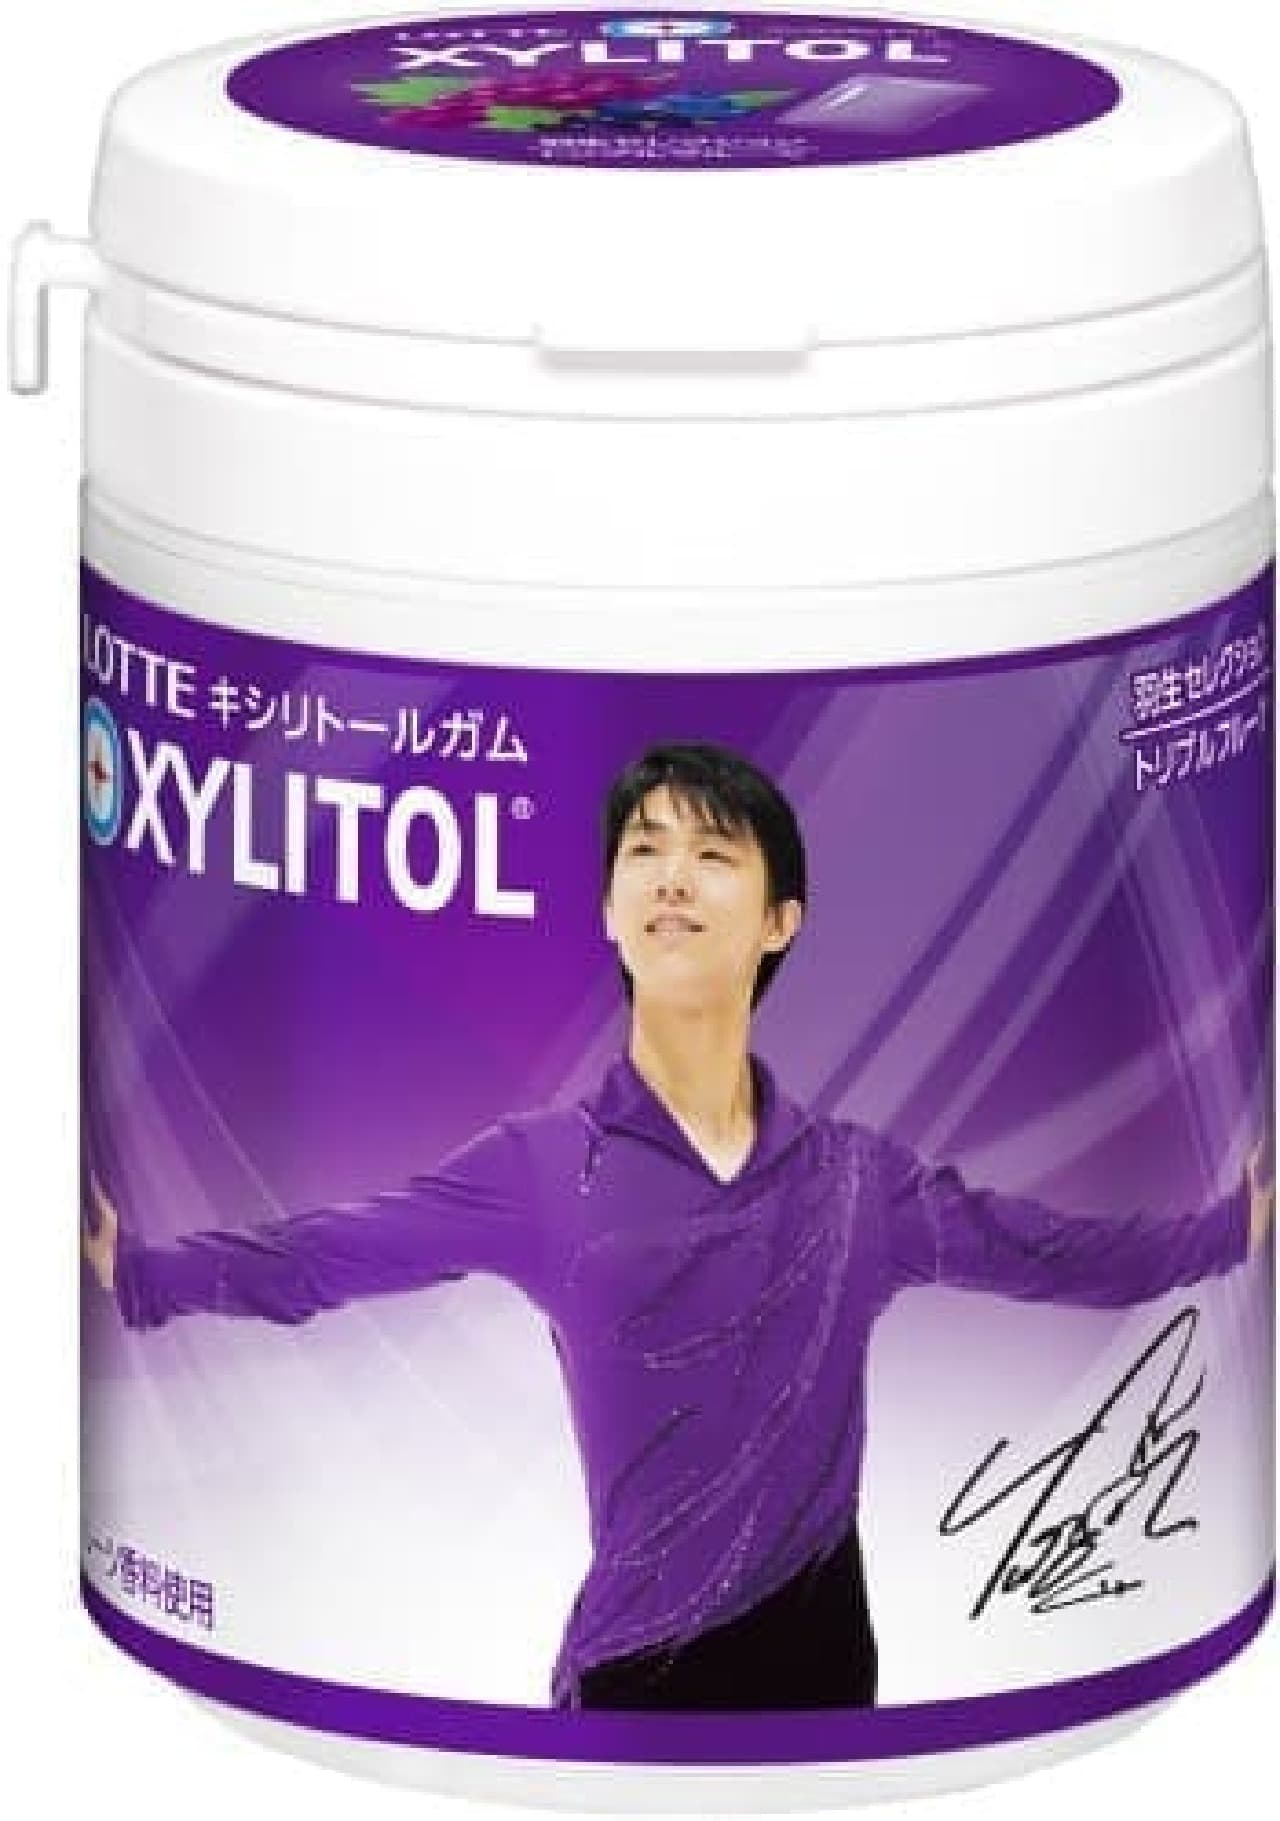 Lotte "Xylitol Hanyu Player Select Bottle"